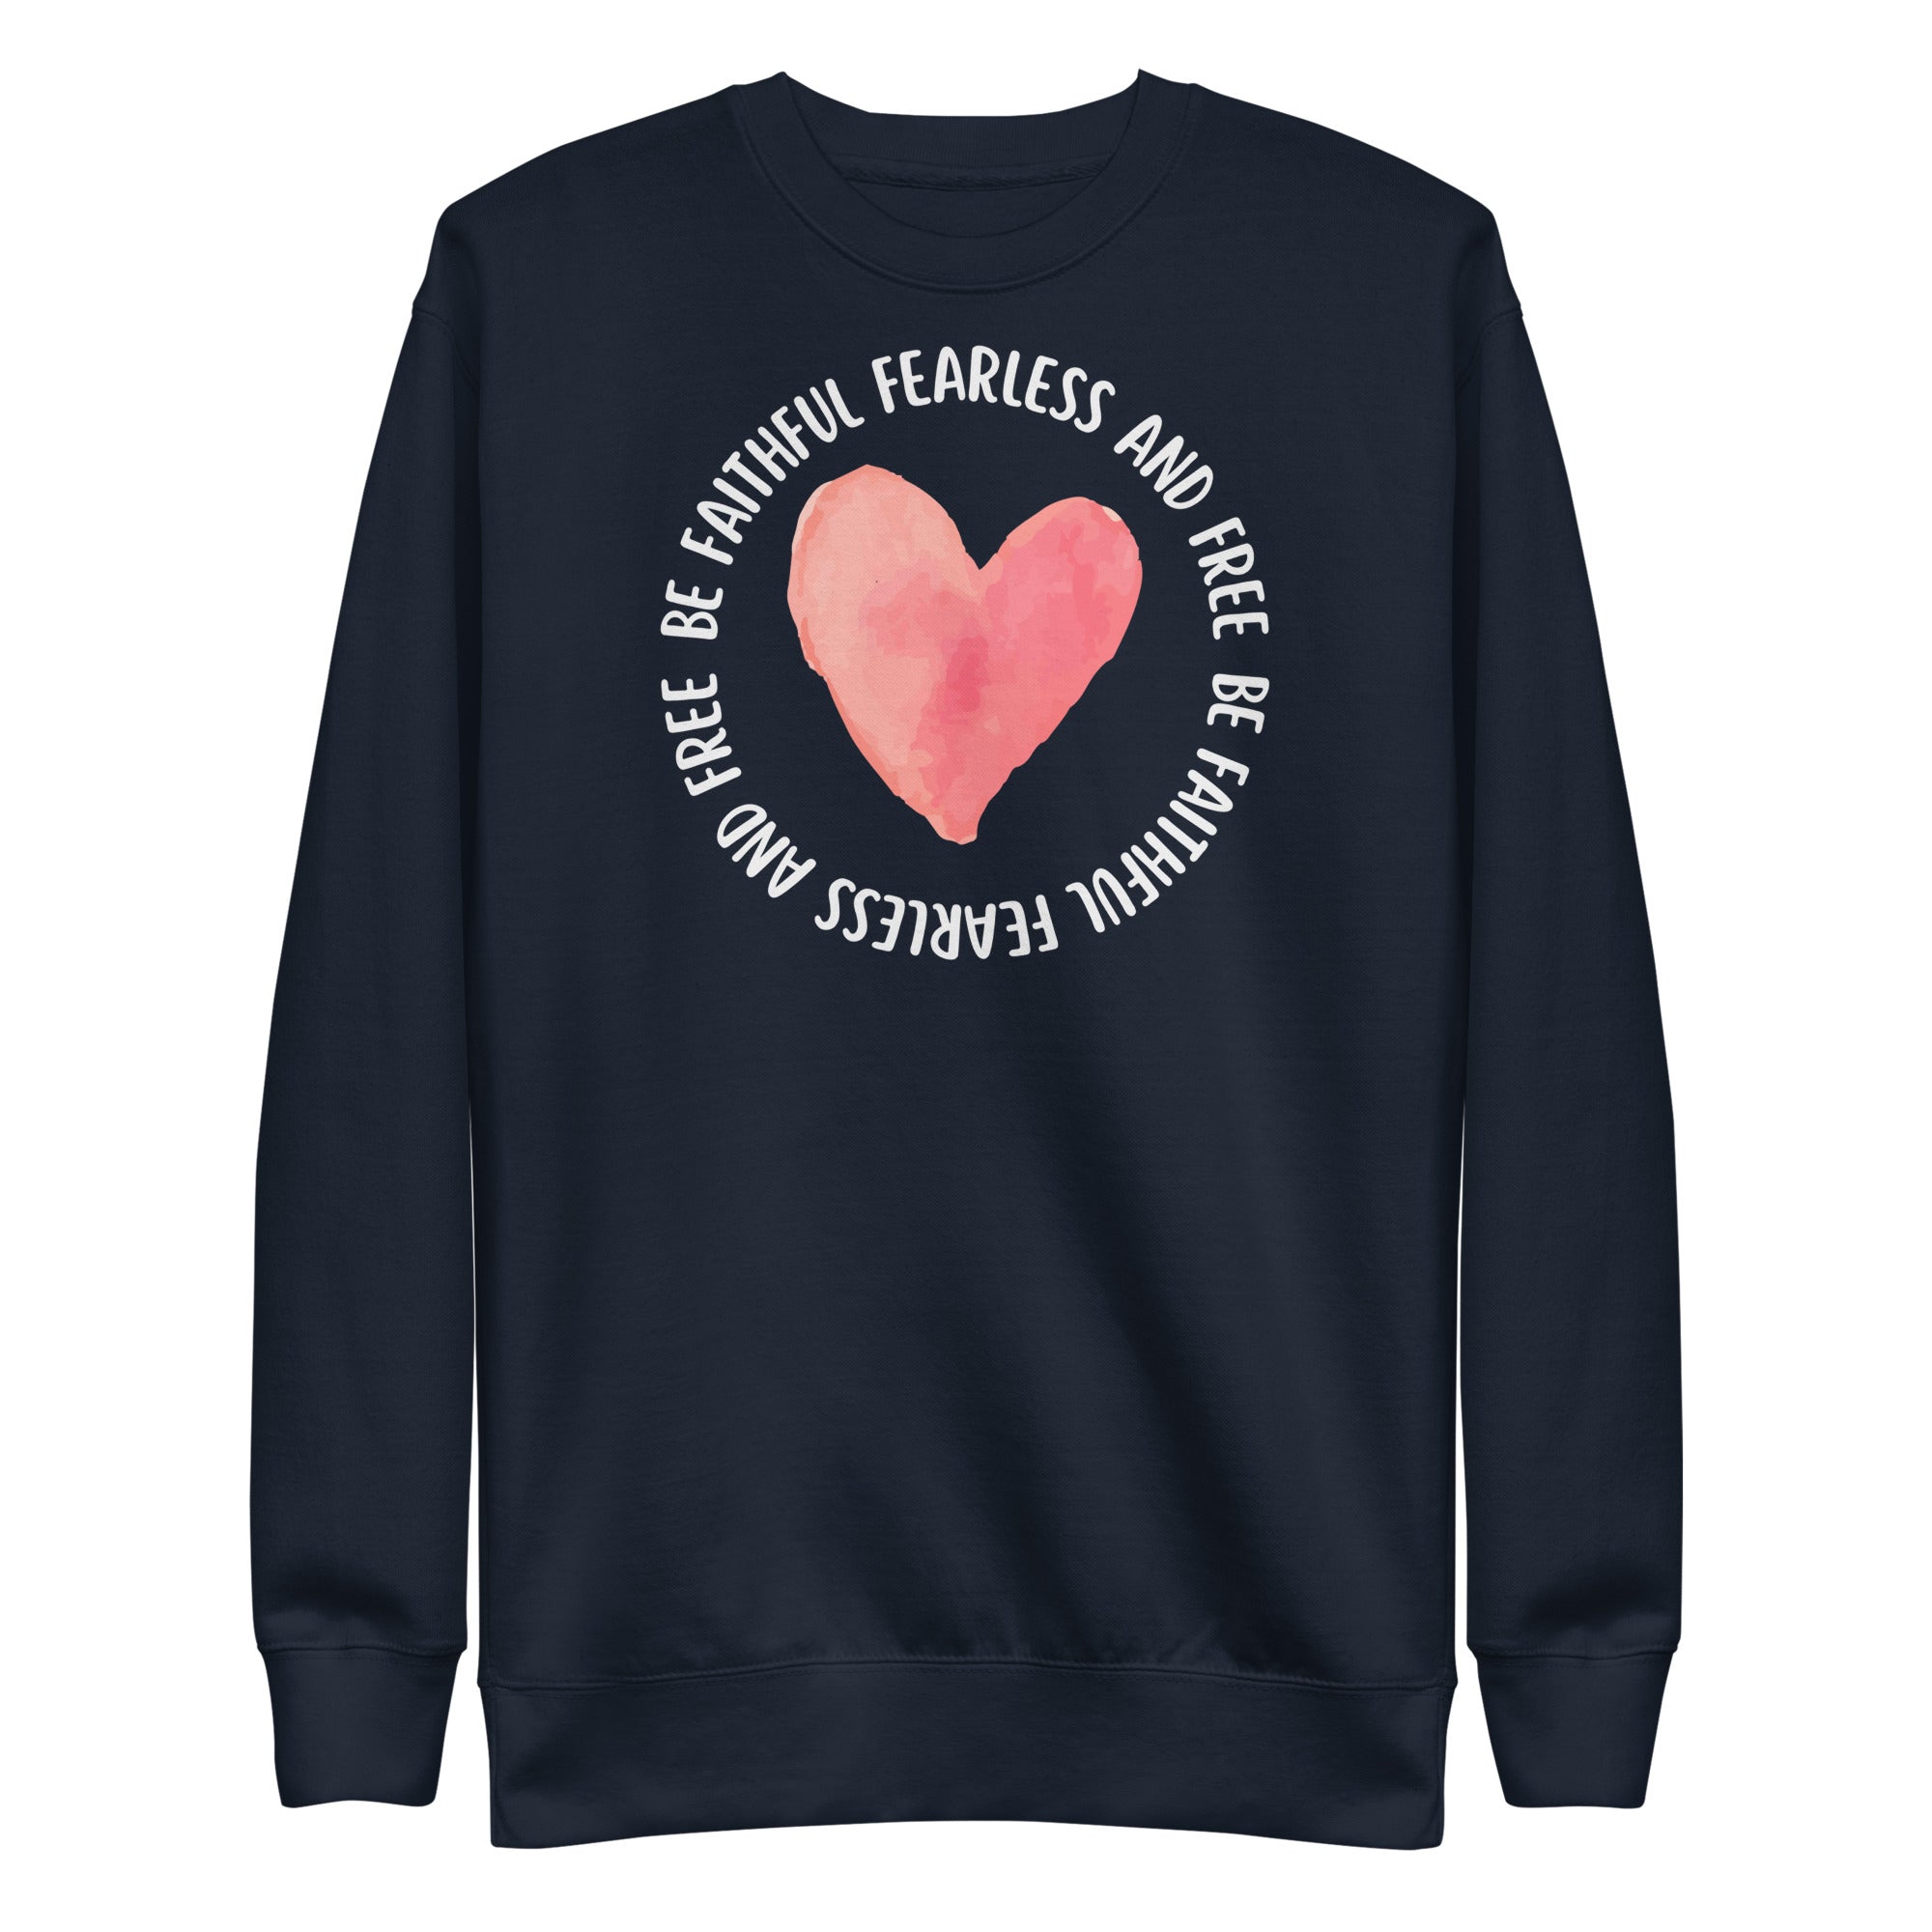 Be Faithful Fearless and Free Unisex Premium Sweatshirt